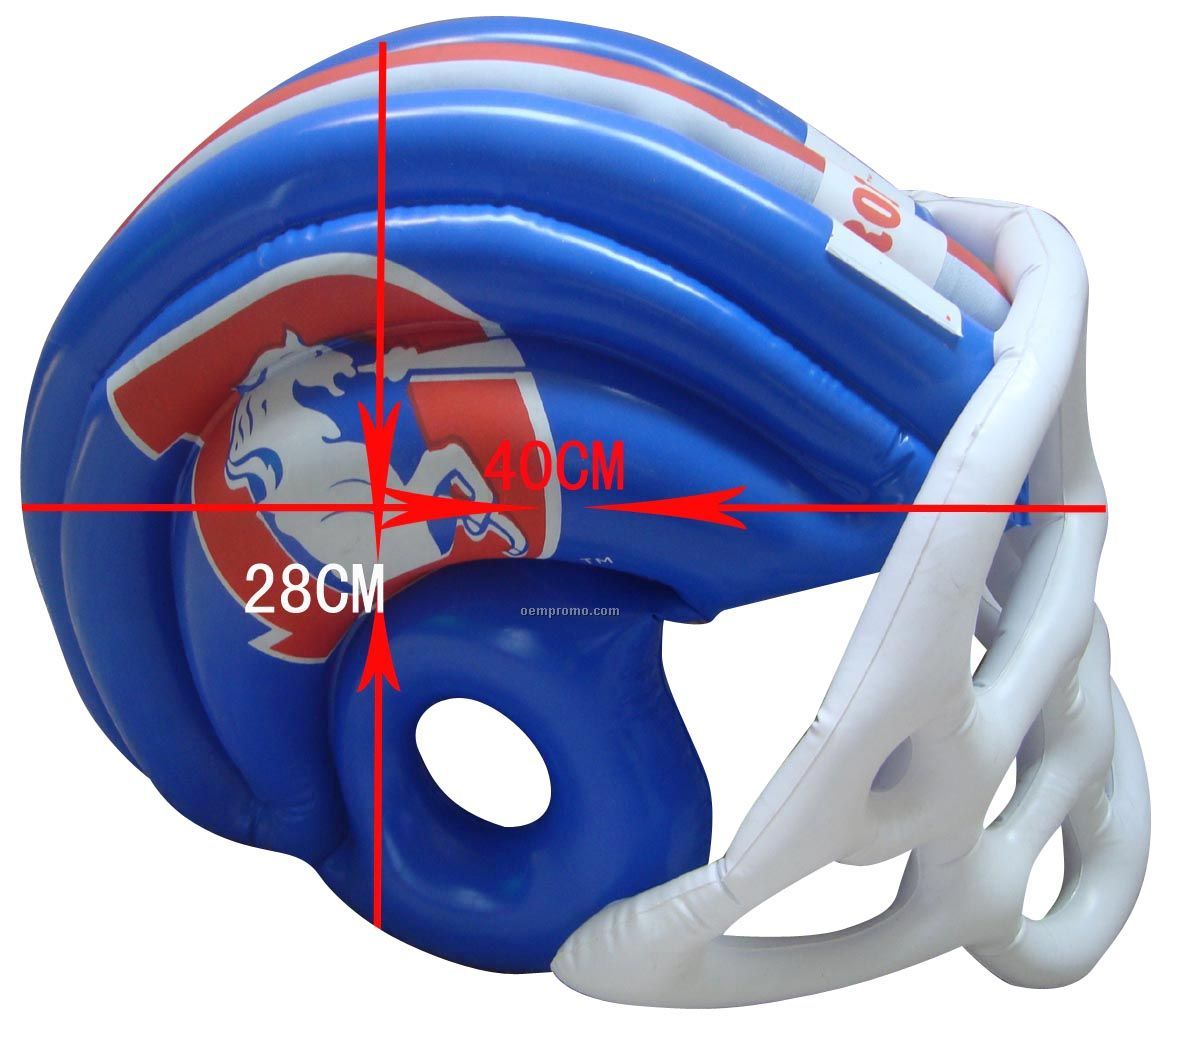 Inflatable Toy Helmet